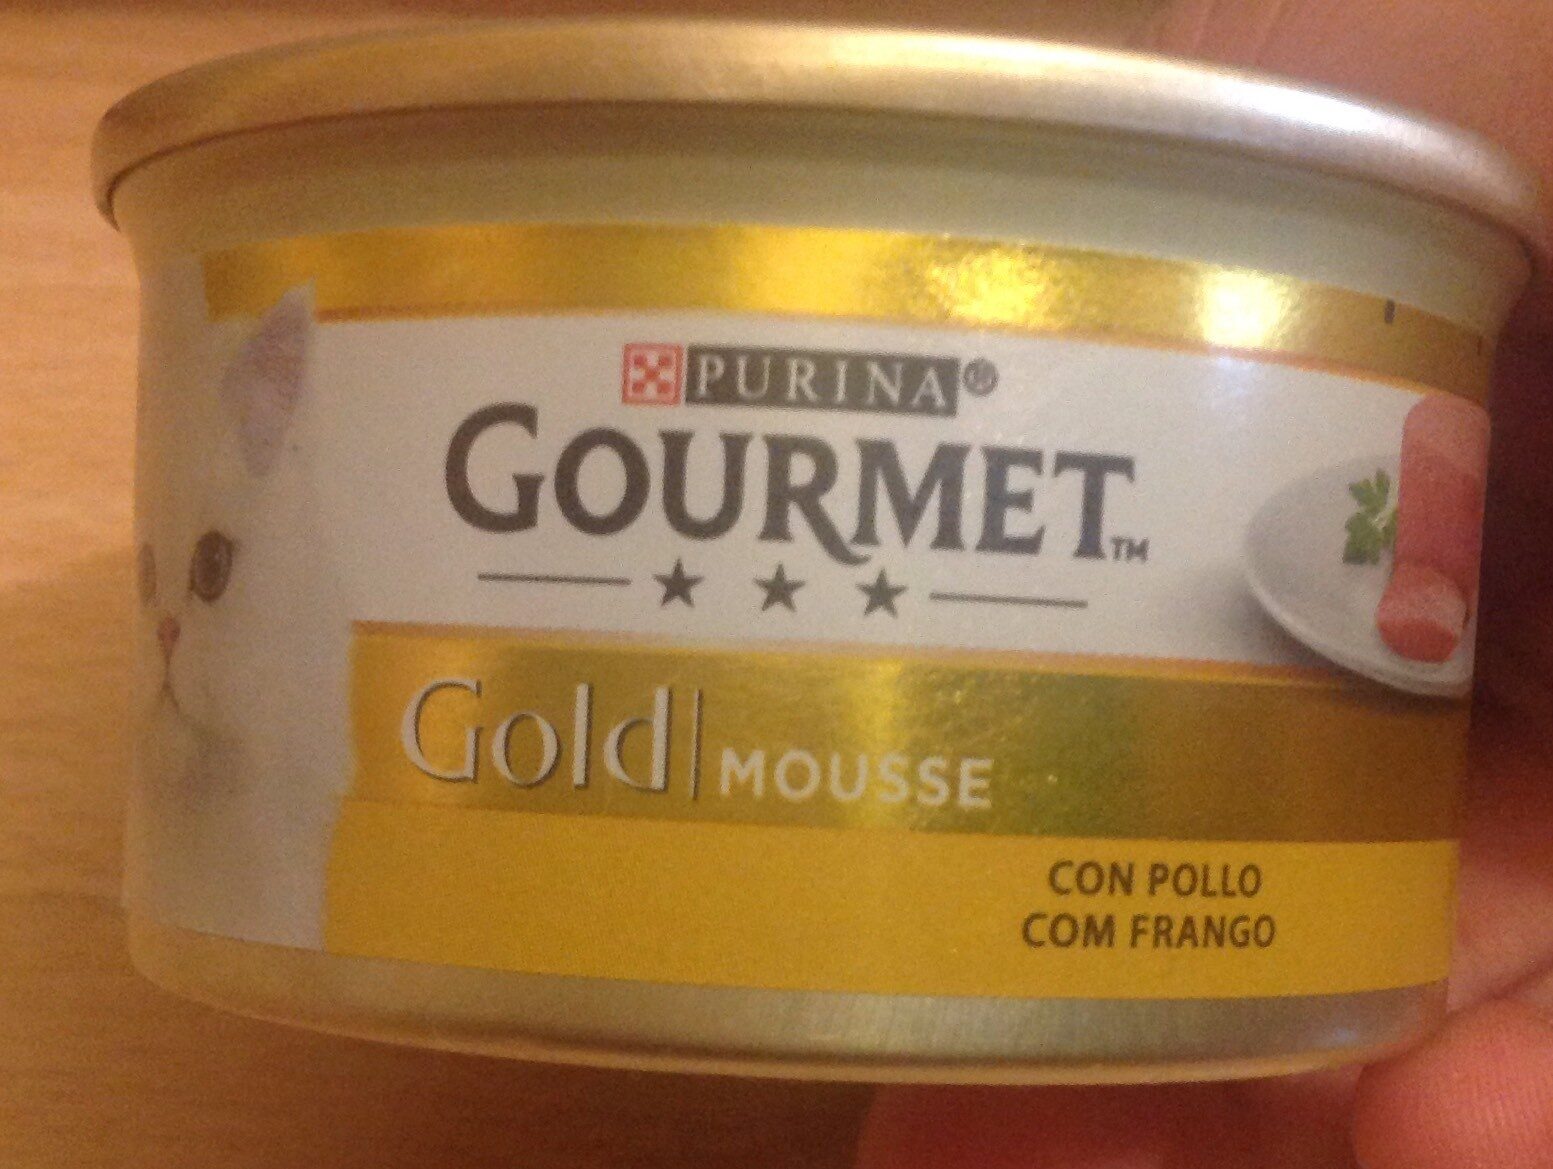 Gourmet gold mousse - Product - es